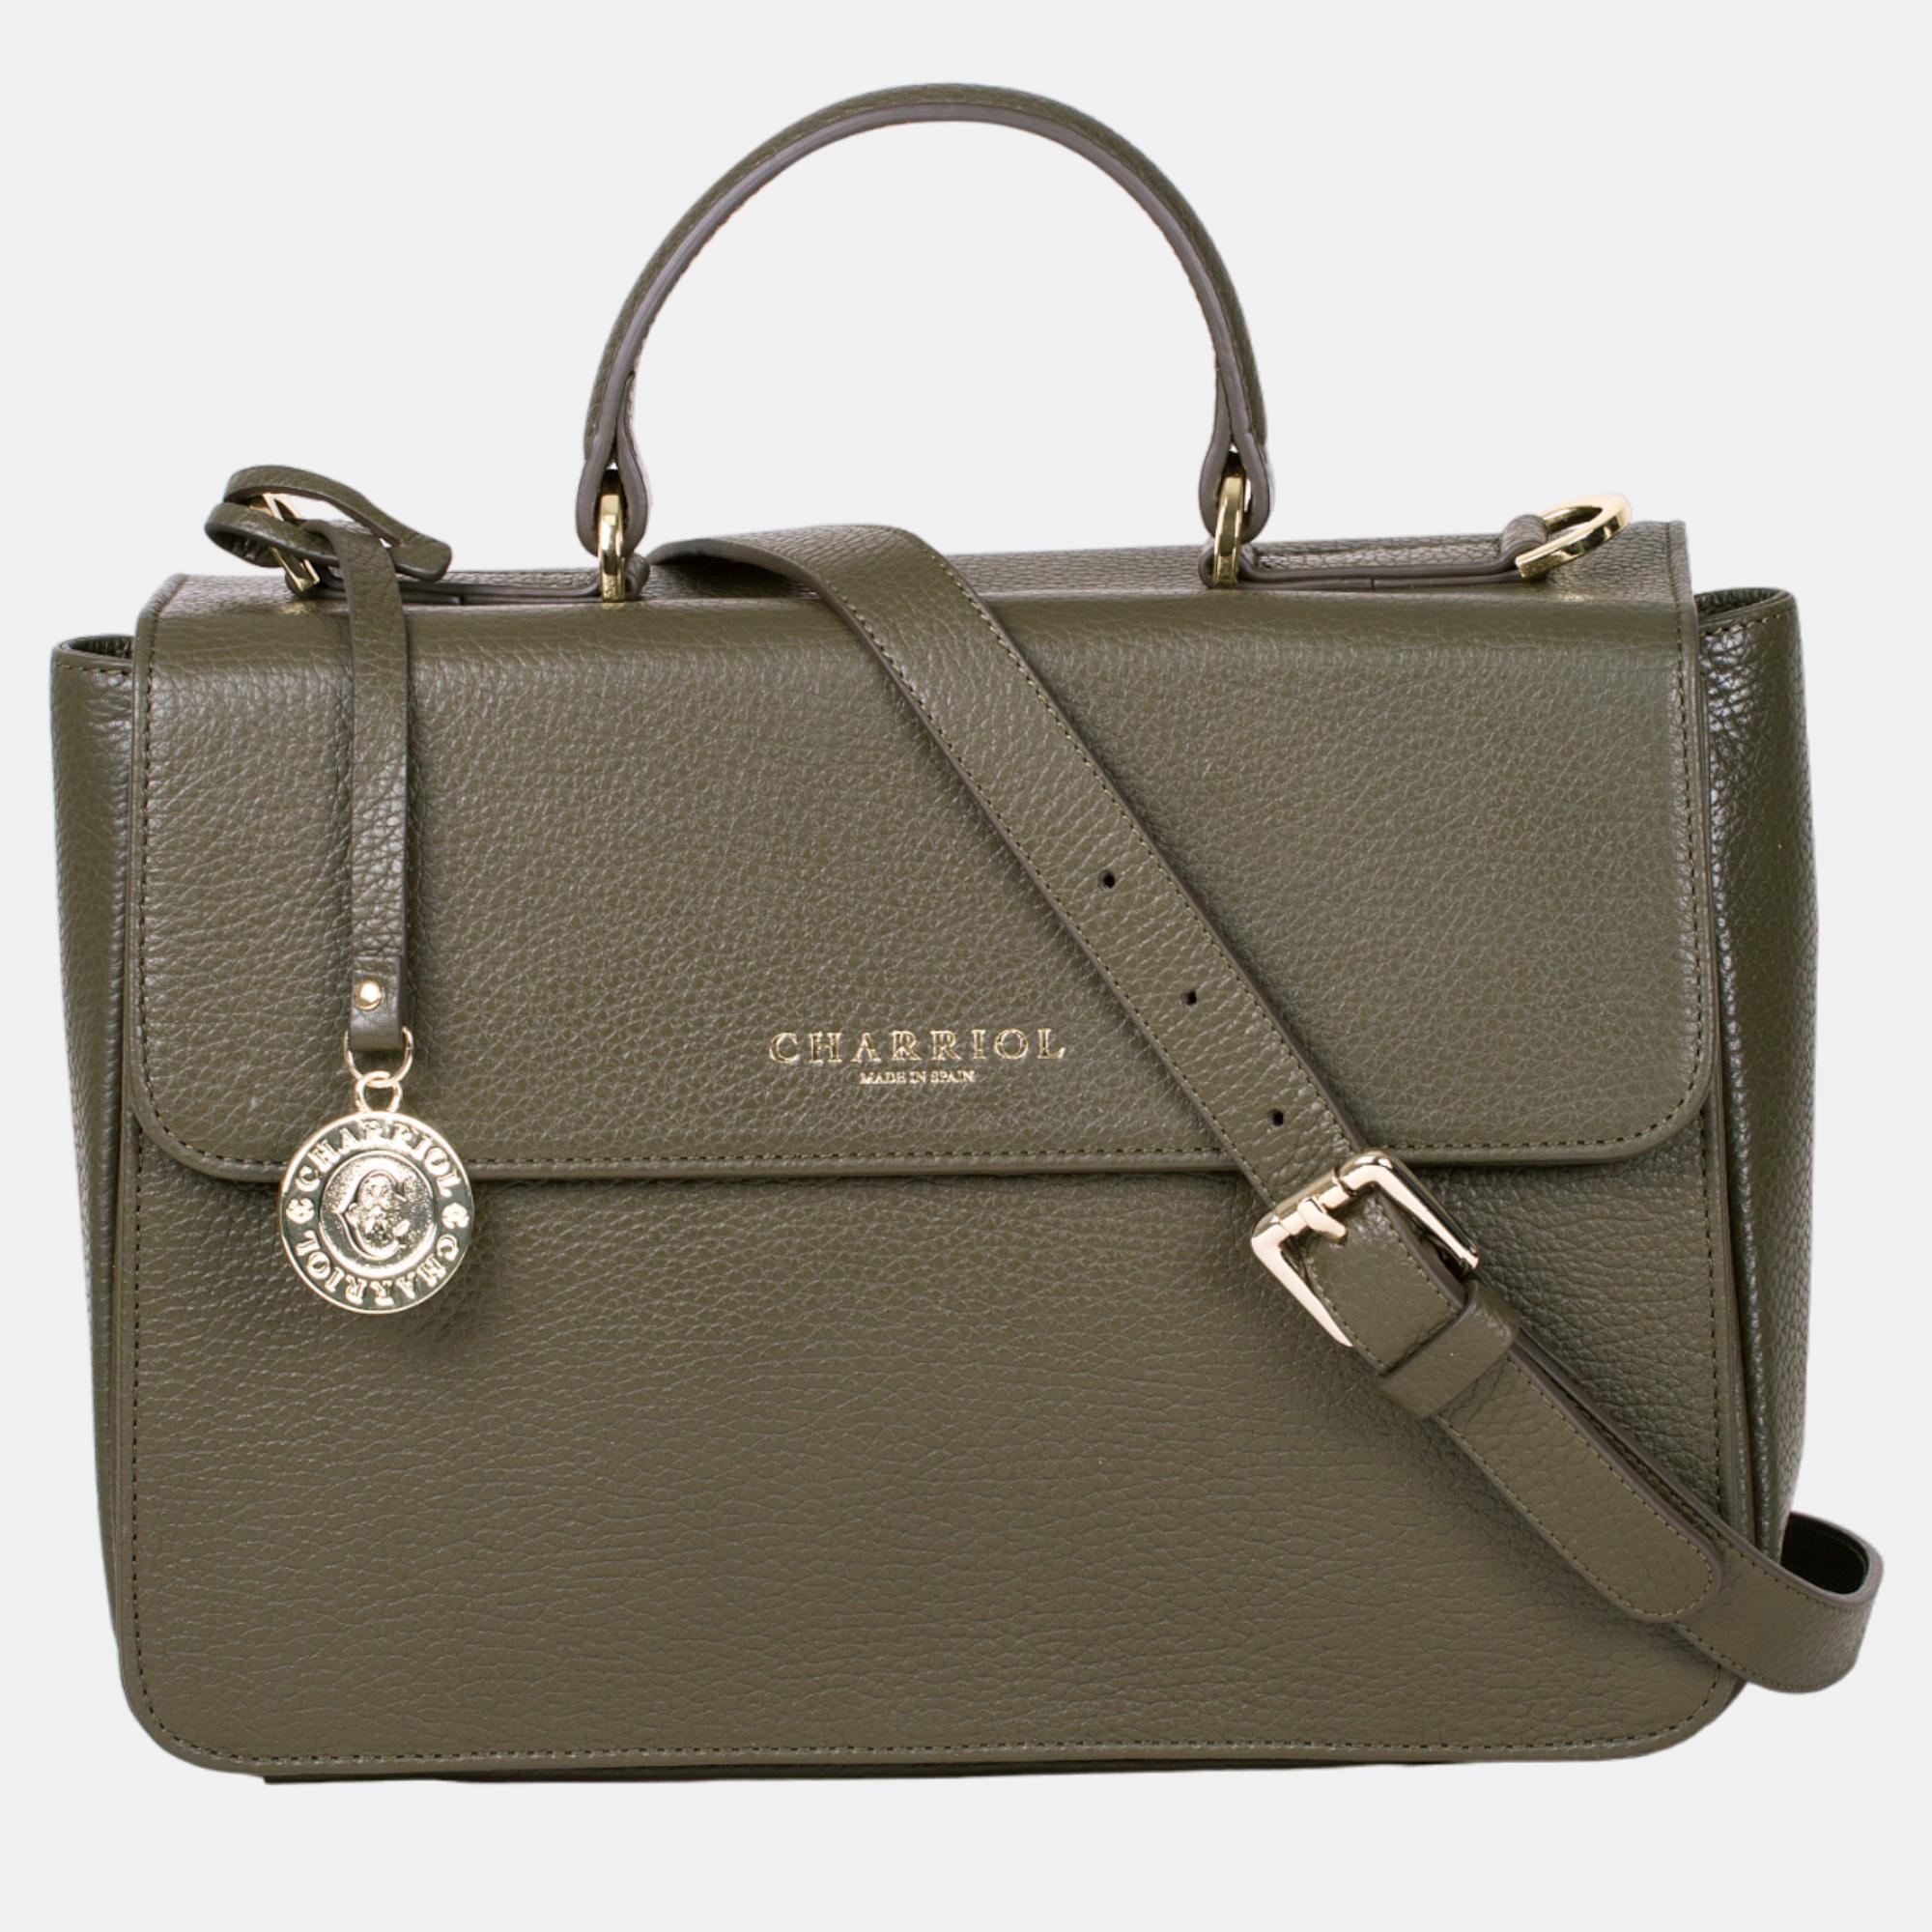 Charriol  leather  handbag